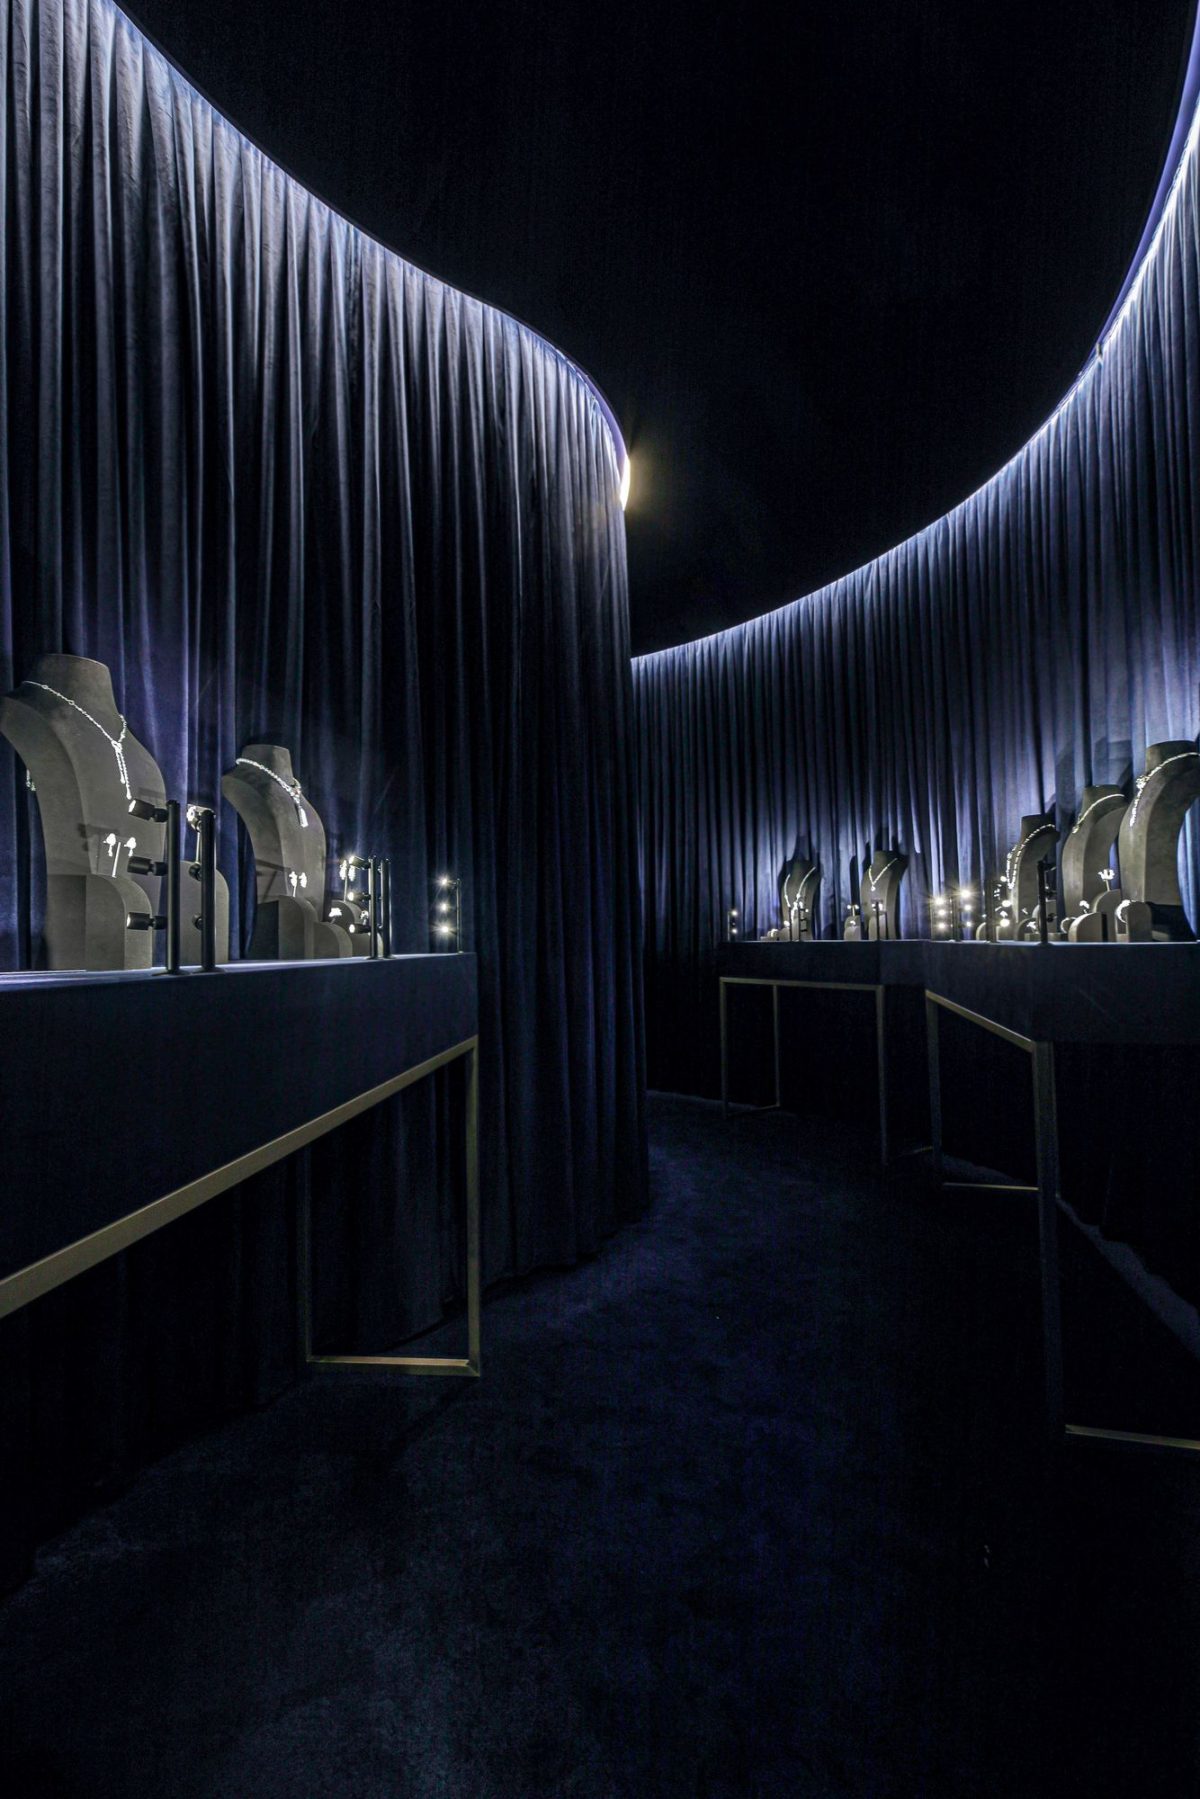 Louis Vuitton Celebrates Bravery High Jewelry Collection in Monaco